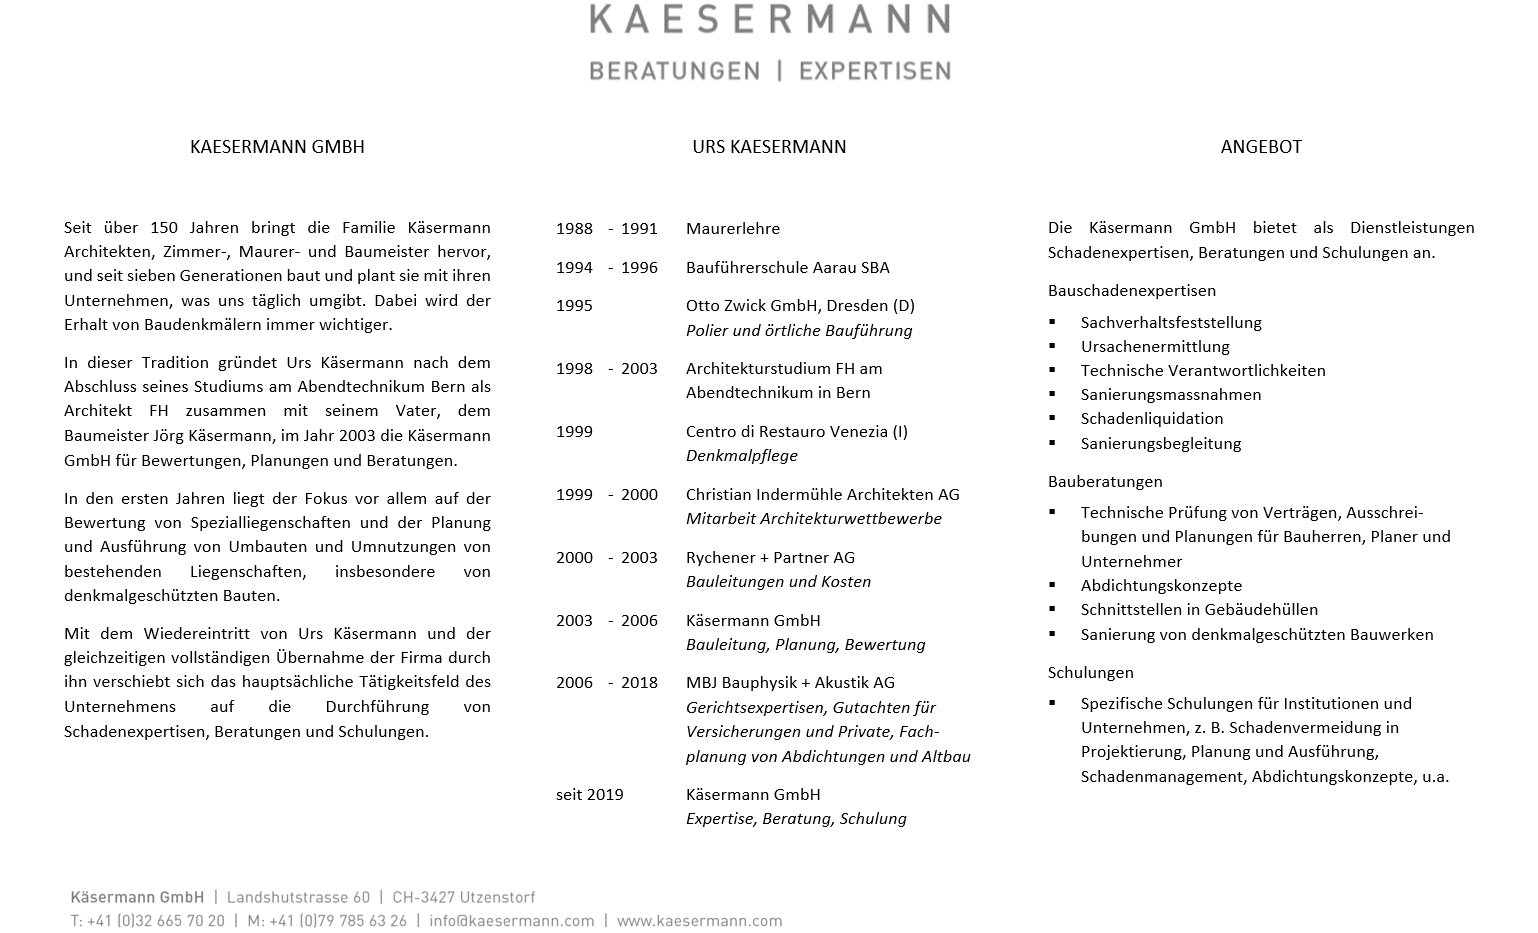 Kaesermann GmbH